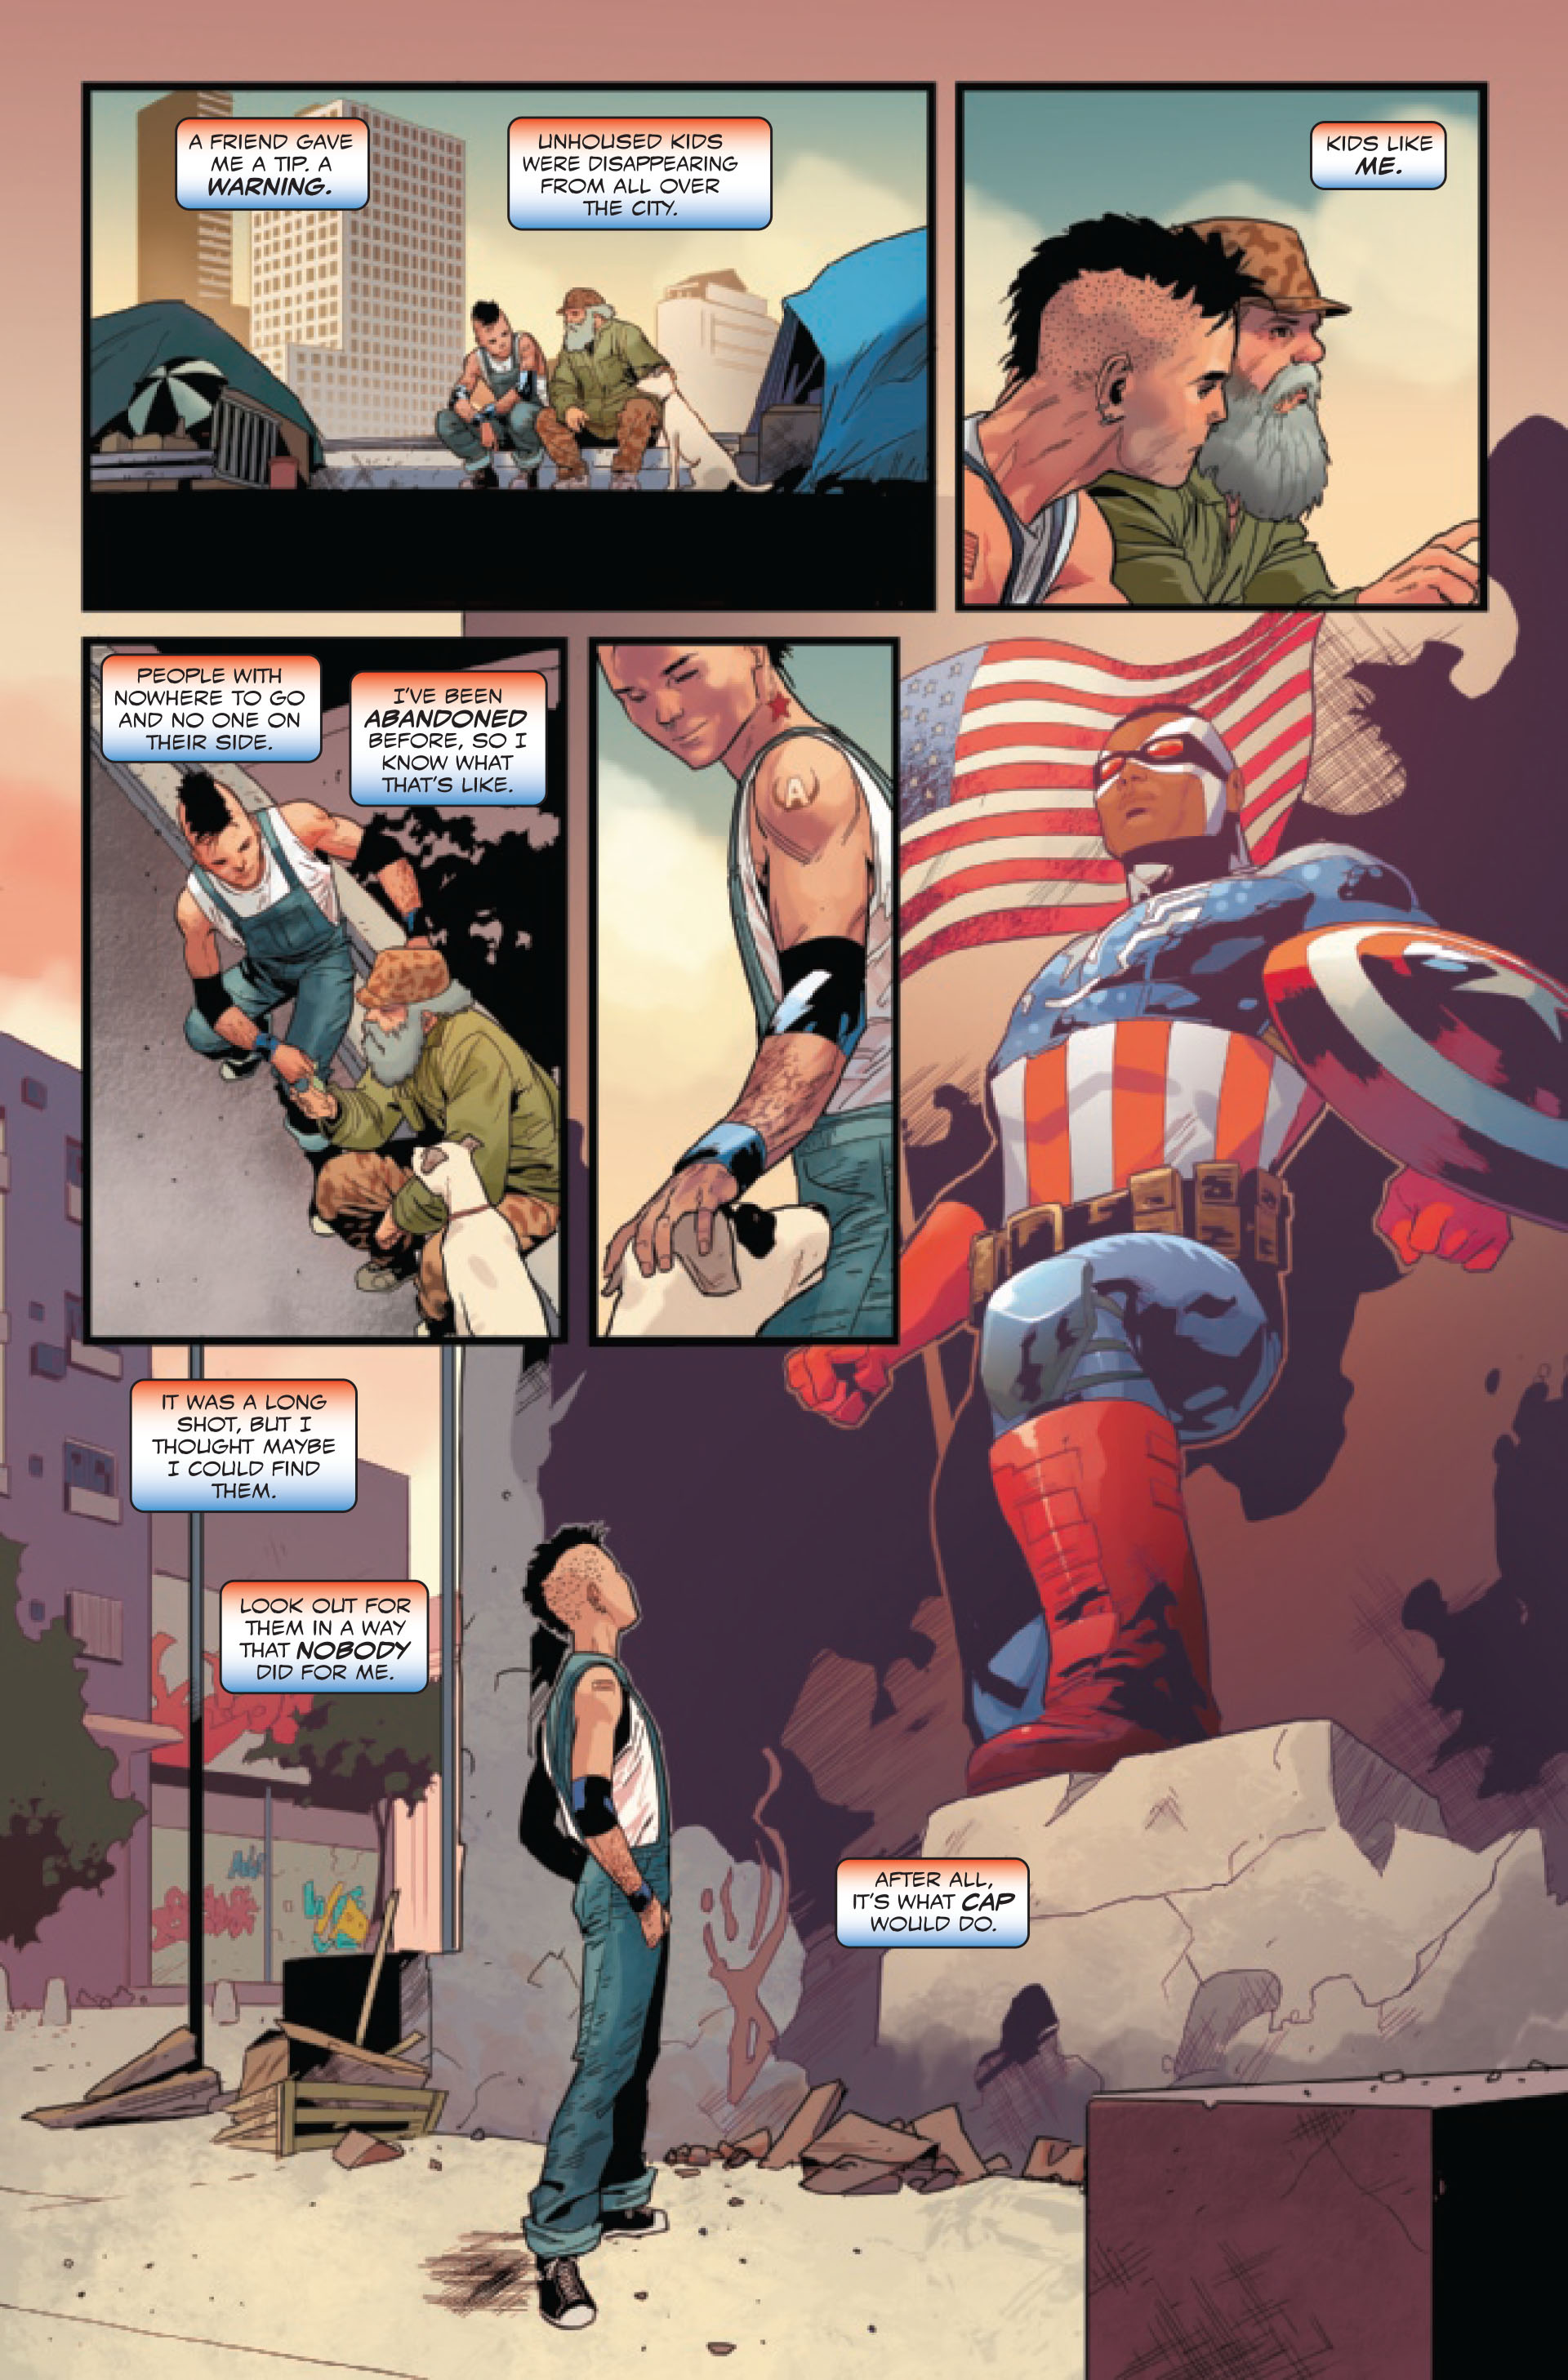 United States of Captain America #1